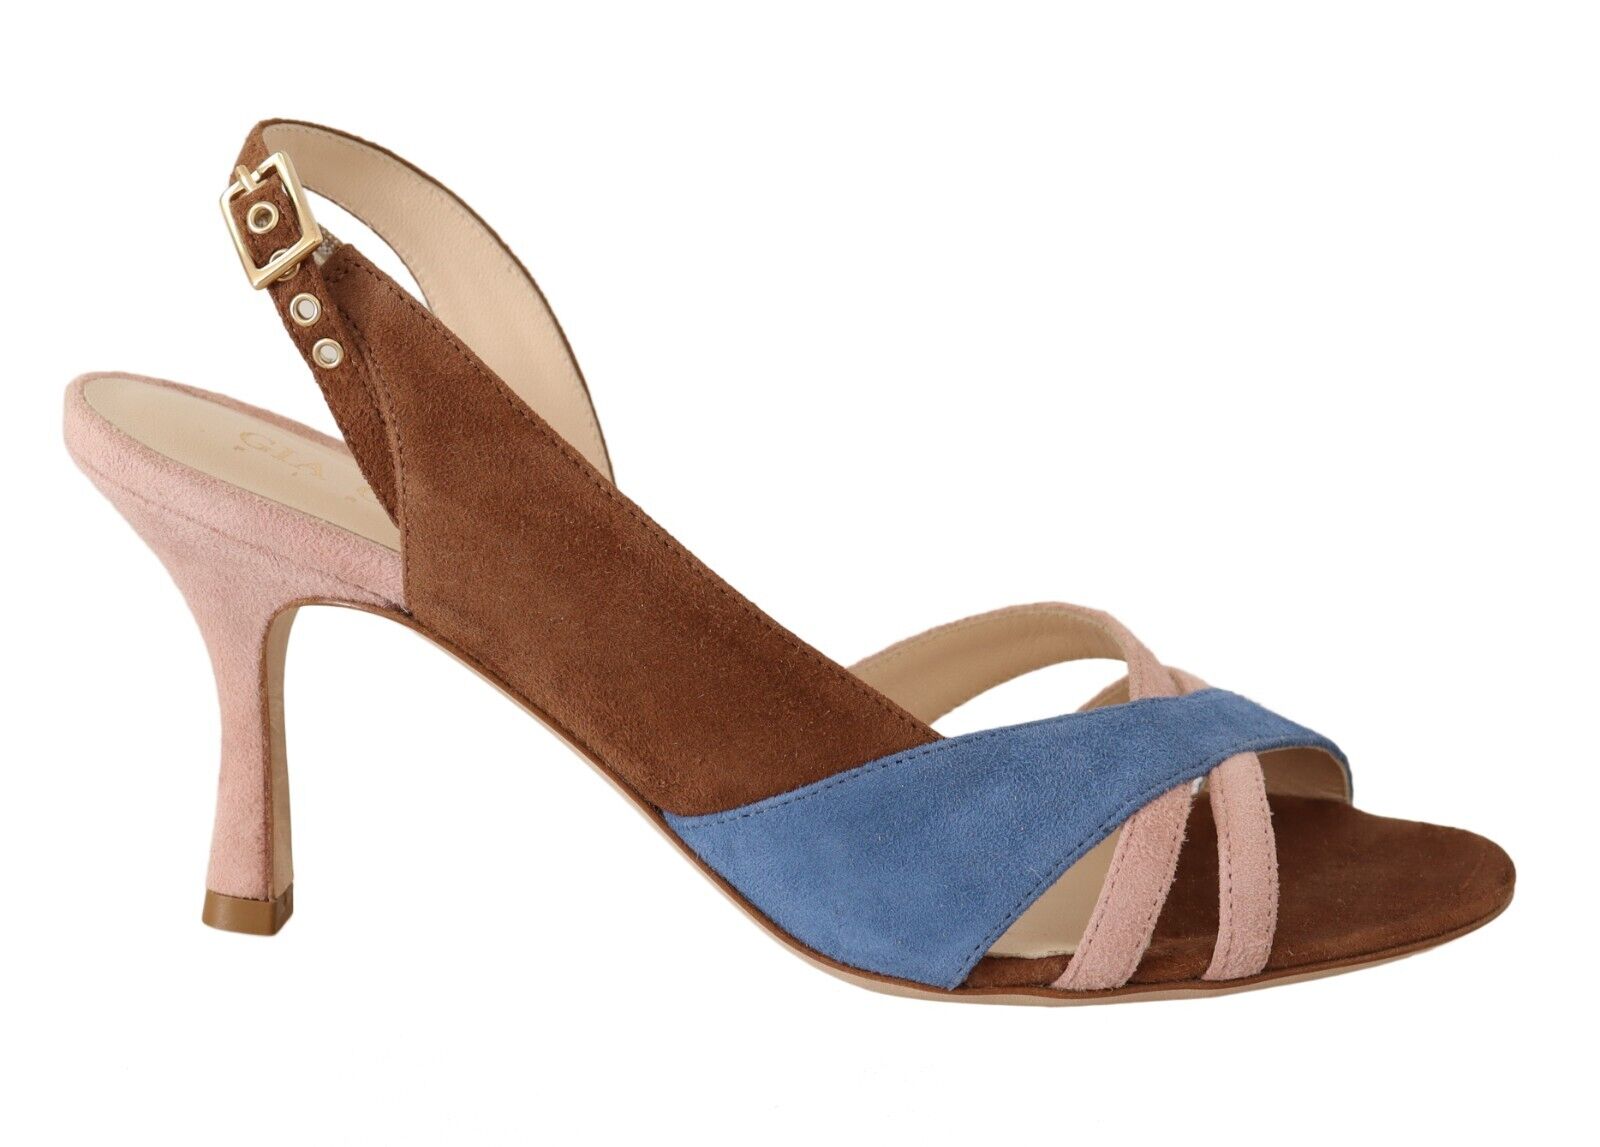 GIA COUTURE Multicolor Suede Leather Slingback Heels Sandals Shoes - Fizigo